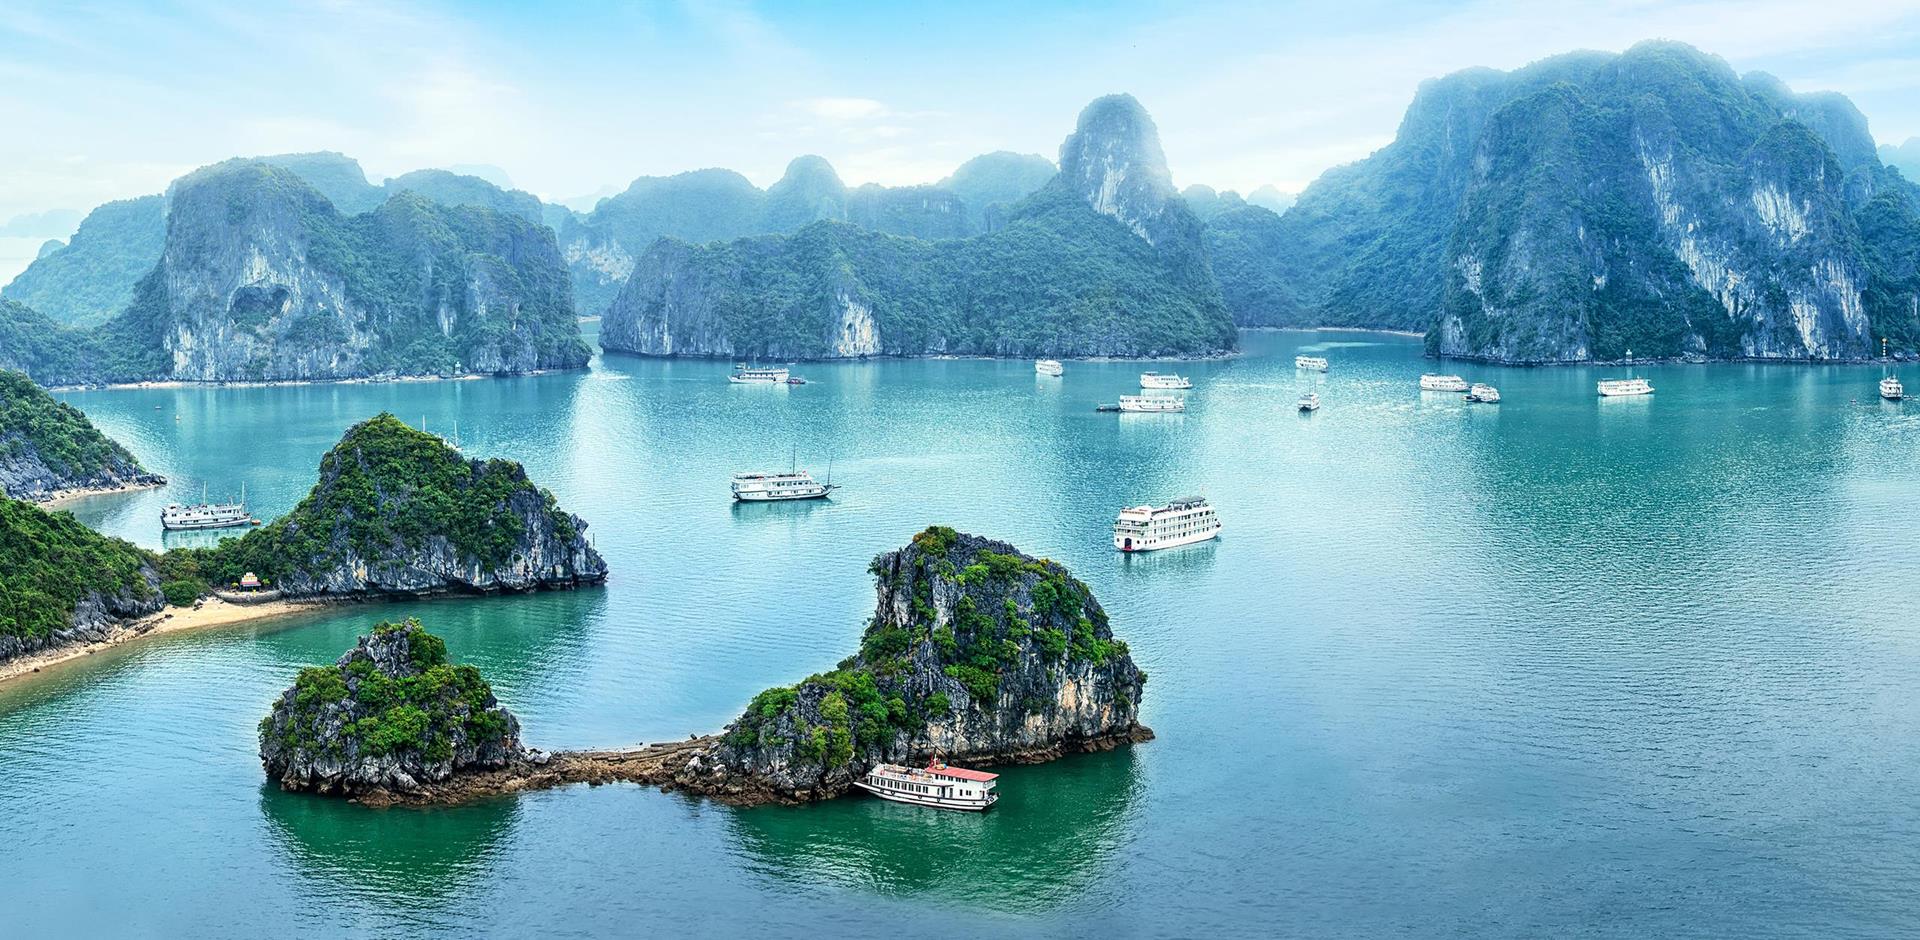 Luxury Vietnam holidays with Abercrombie & Kent: Ha Long Bay.